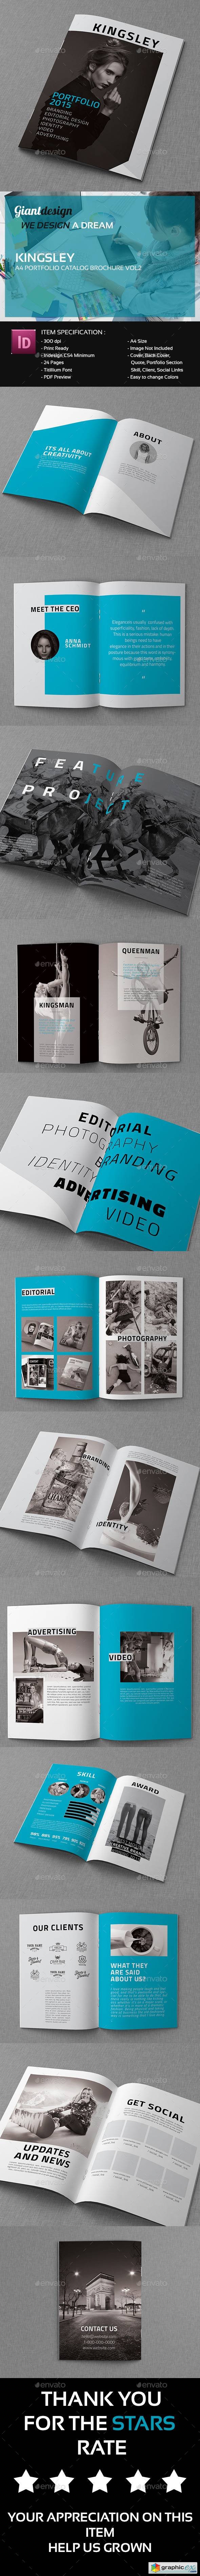 Kingsley - A4 Portfolio Catalog Brochure Vol 2